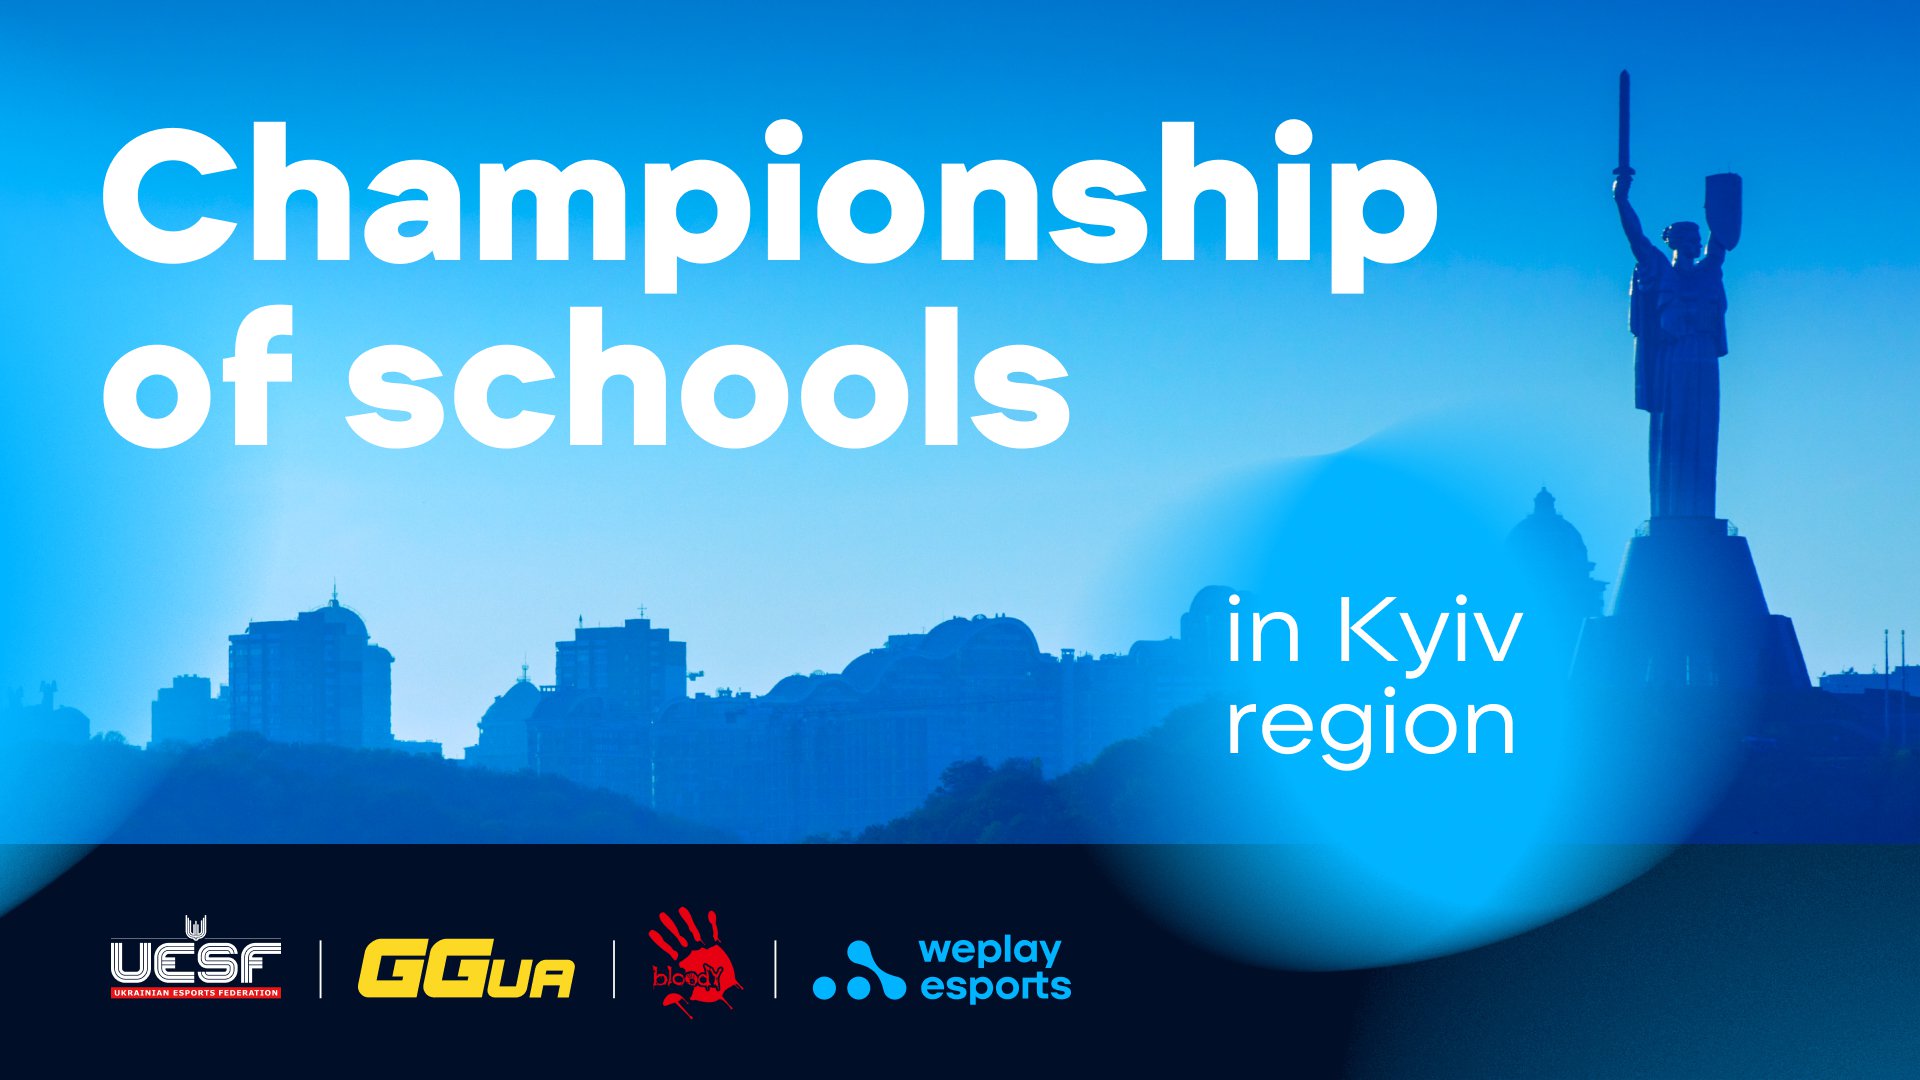 CS:GO and Brawl Stars esports championship for schoolchildren was held in the Kyiv region. Visual: WePlay Holding